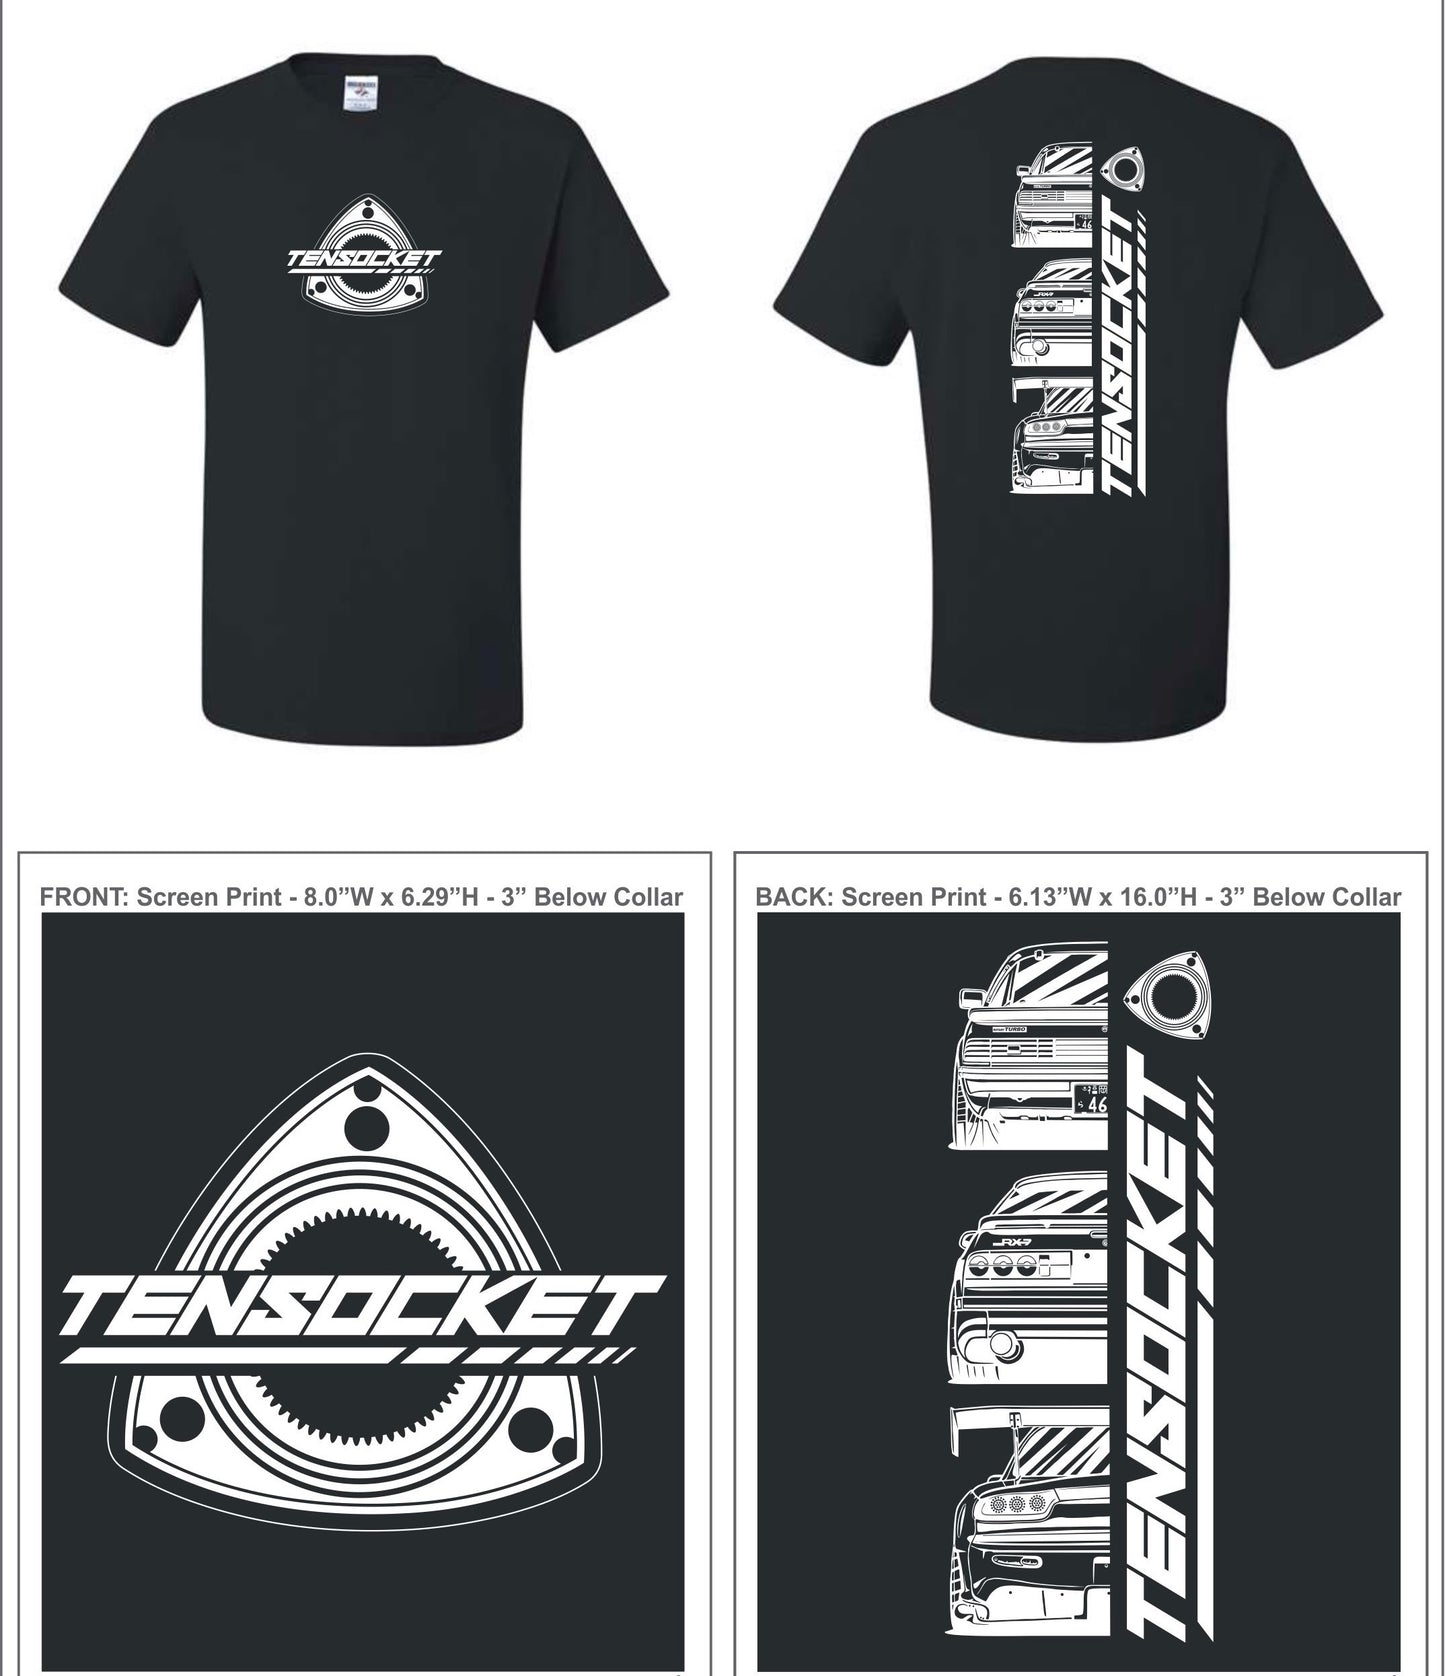 Rotary Black / Tensocket T-Shirt